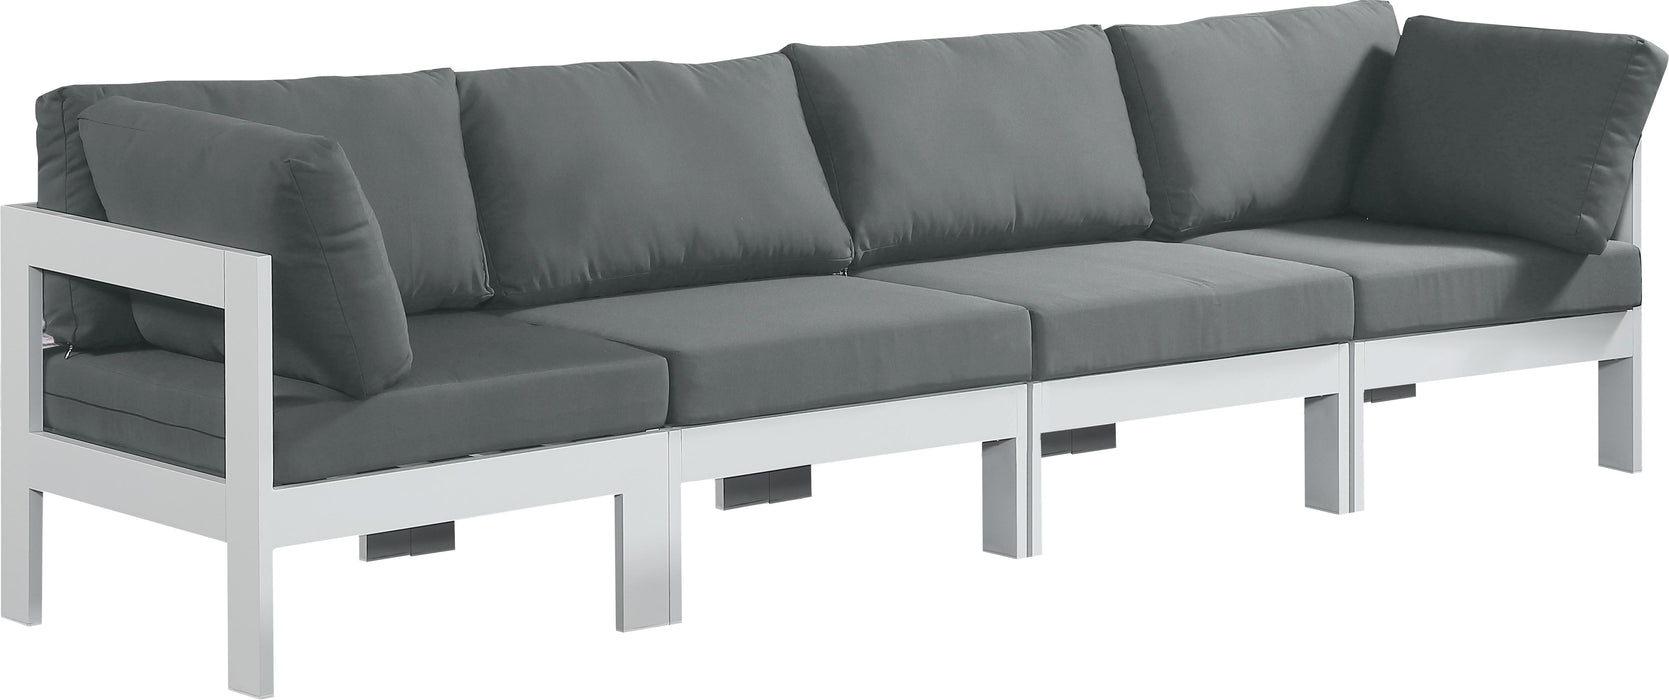 Nizuc Grey Waterproof Fabric Outdoor Patio Modular Sofa image